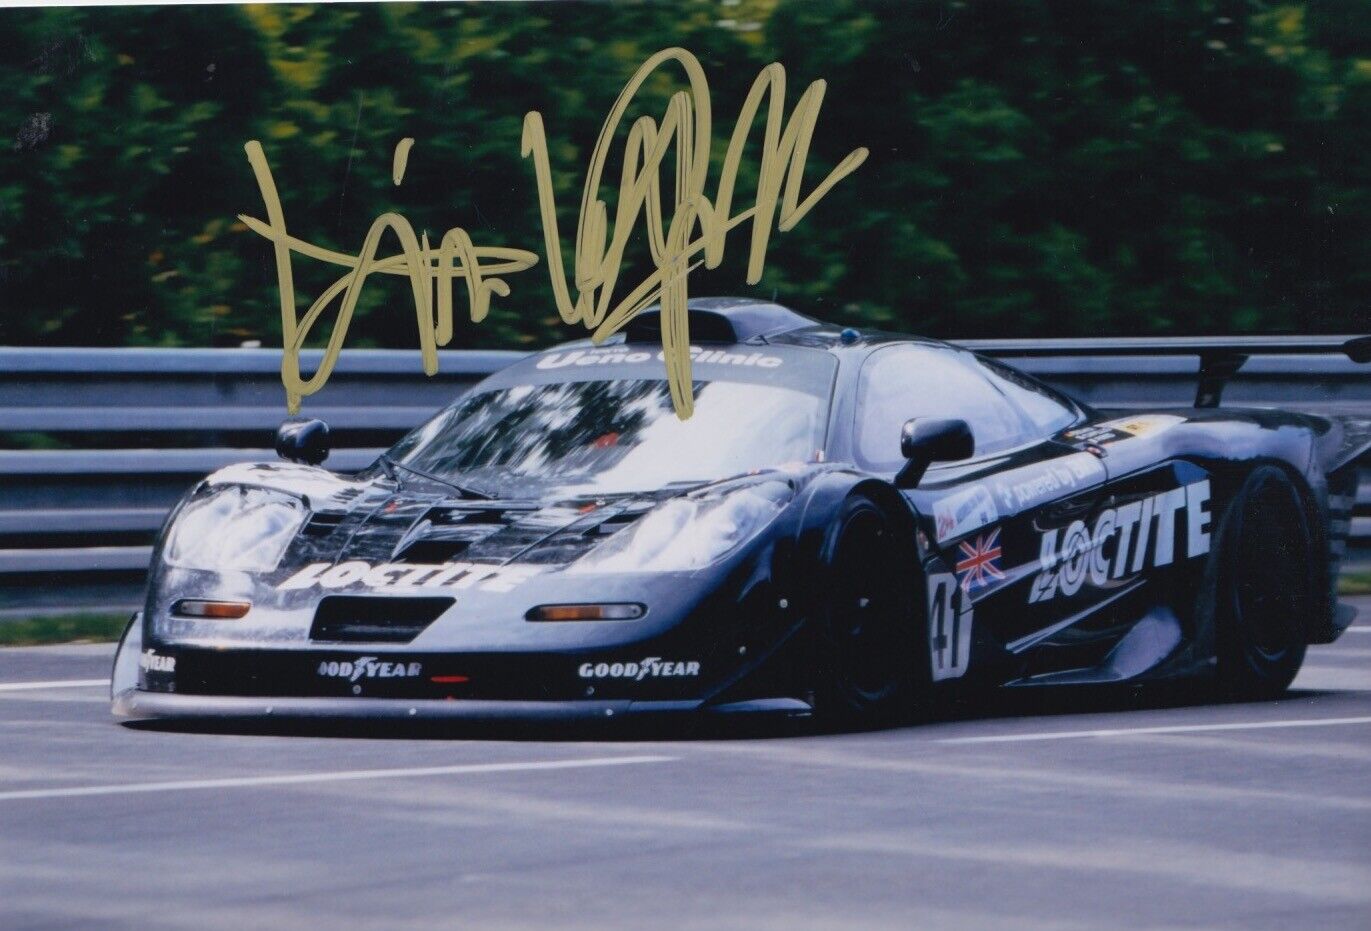 Rinaldo Capello Hand Signed 7x5 Photo Poster painting - Le Mans Autograph 2.